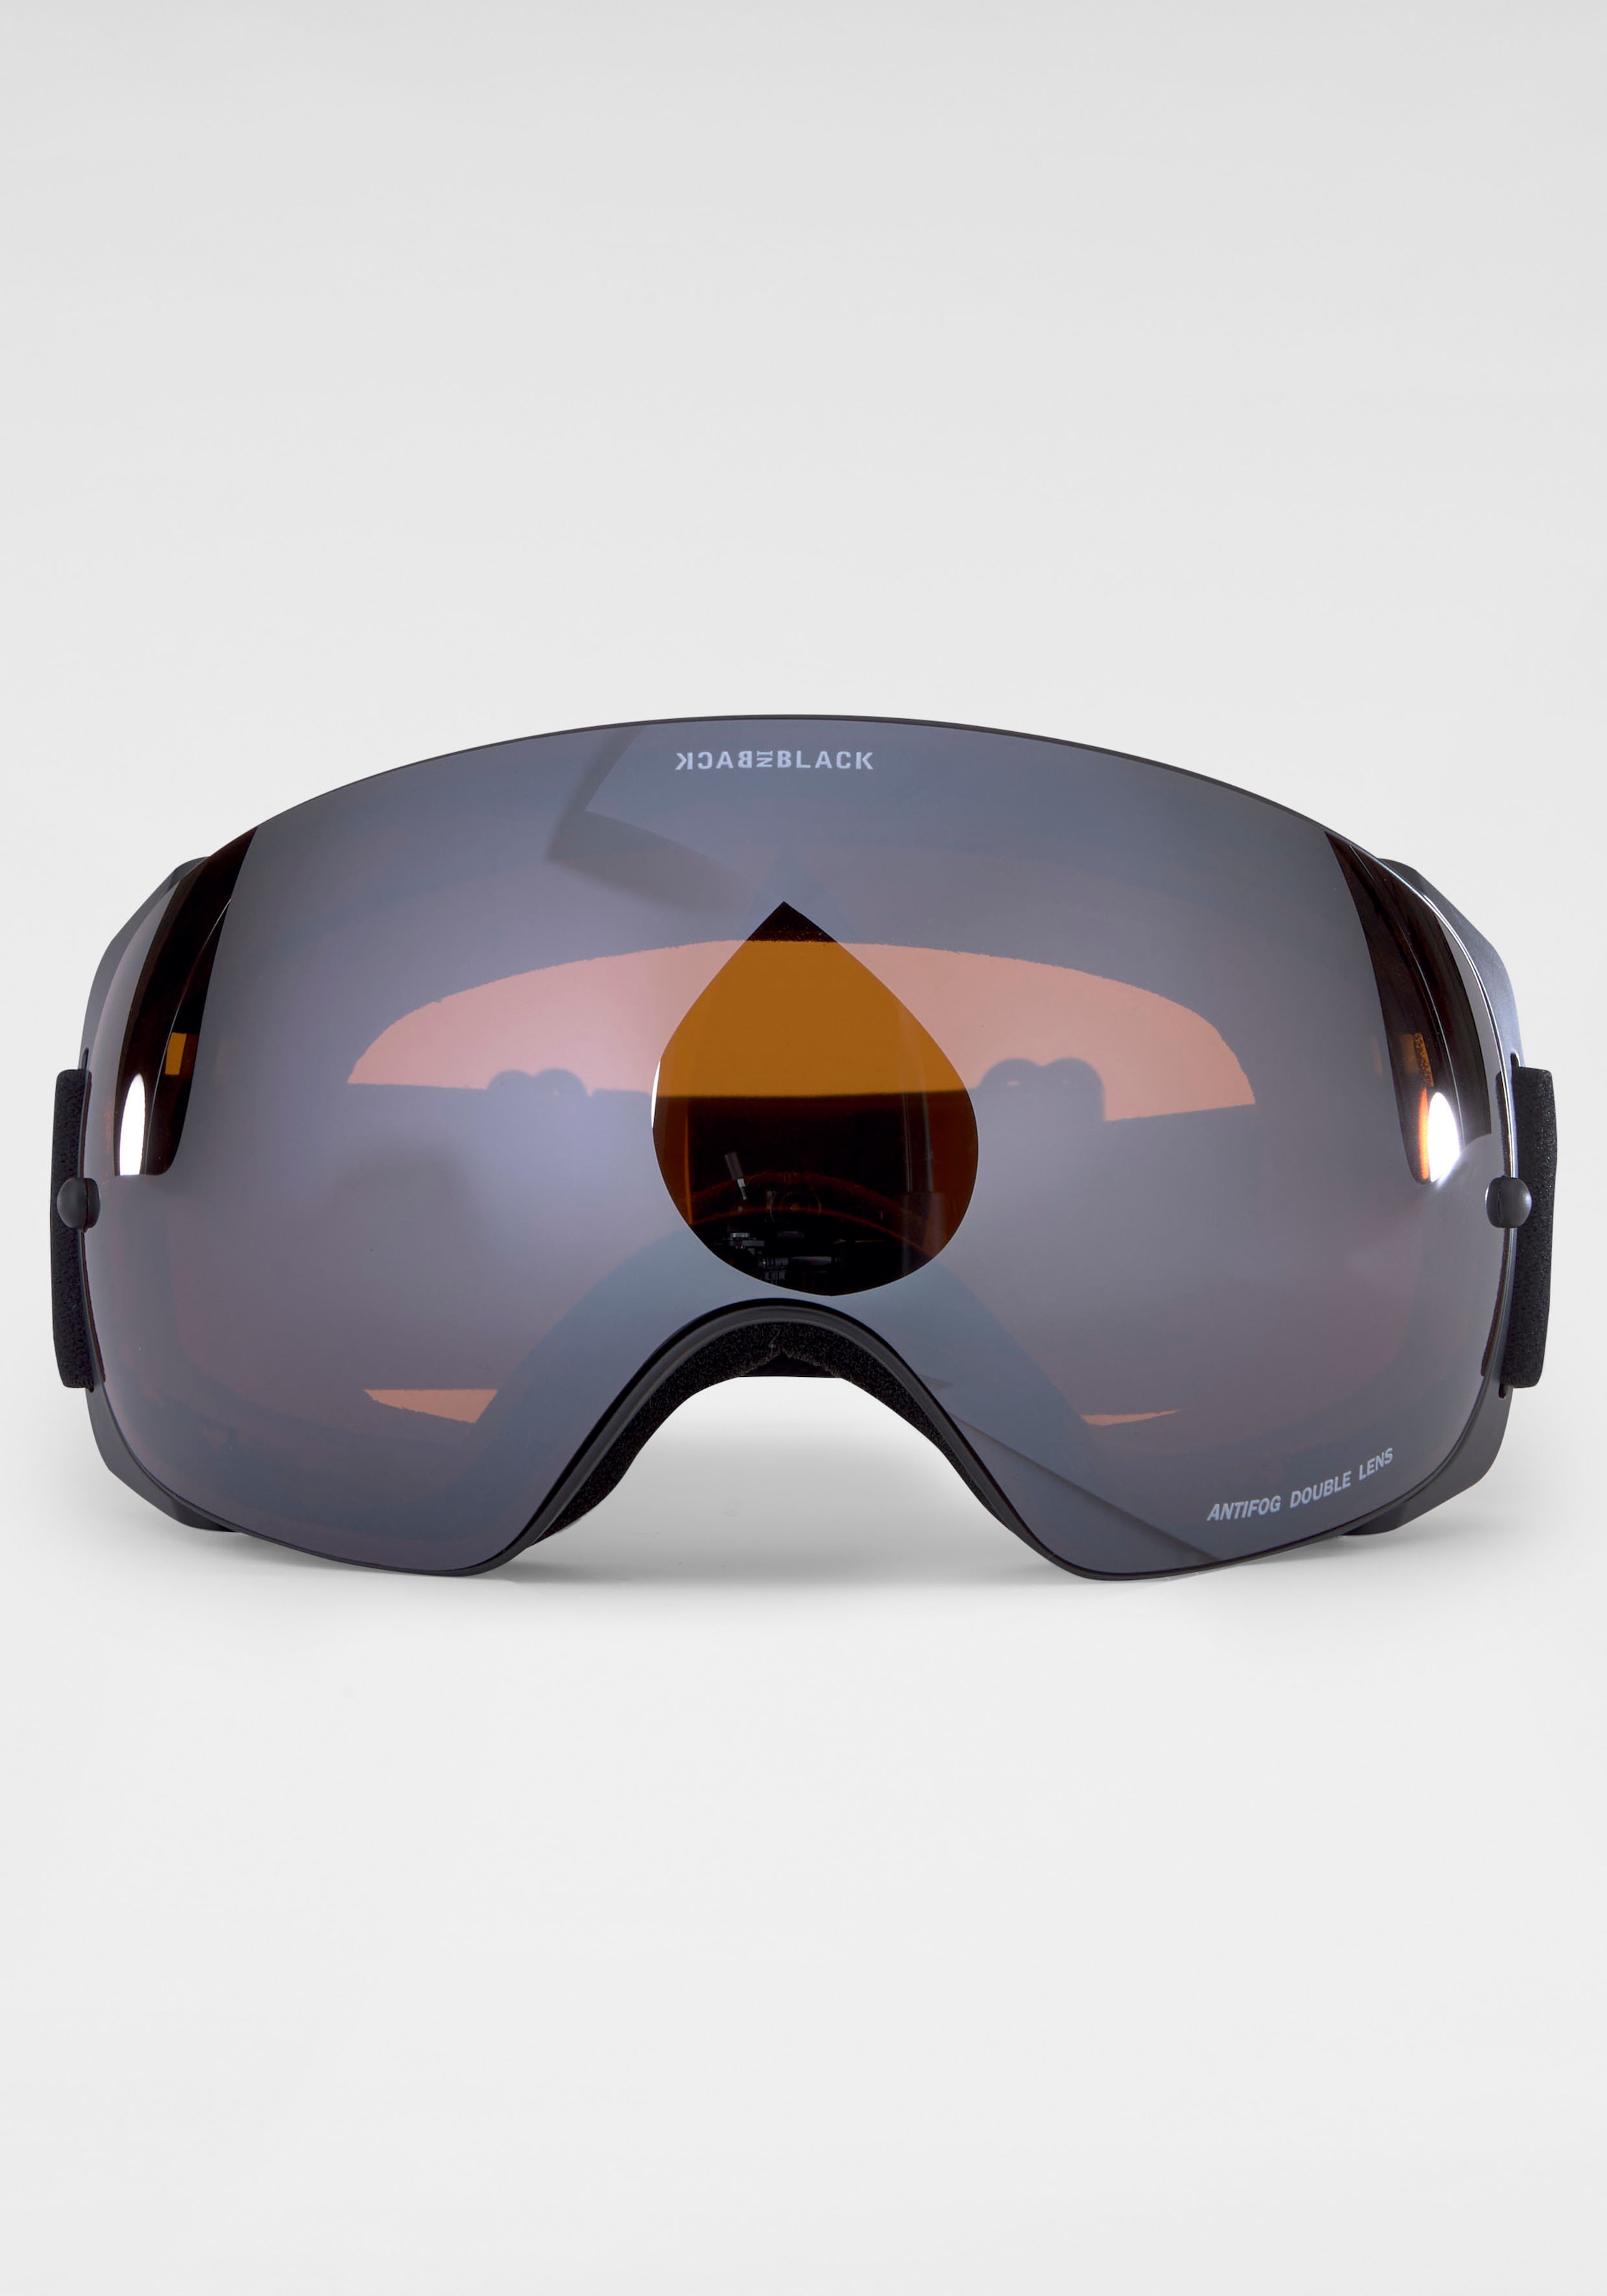 BACK IN BLACK 99 Eyewear bestellen CHF versandkostenfrei Antifog double Skibrille, ab Lens